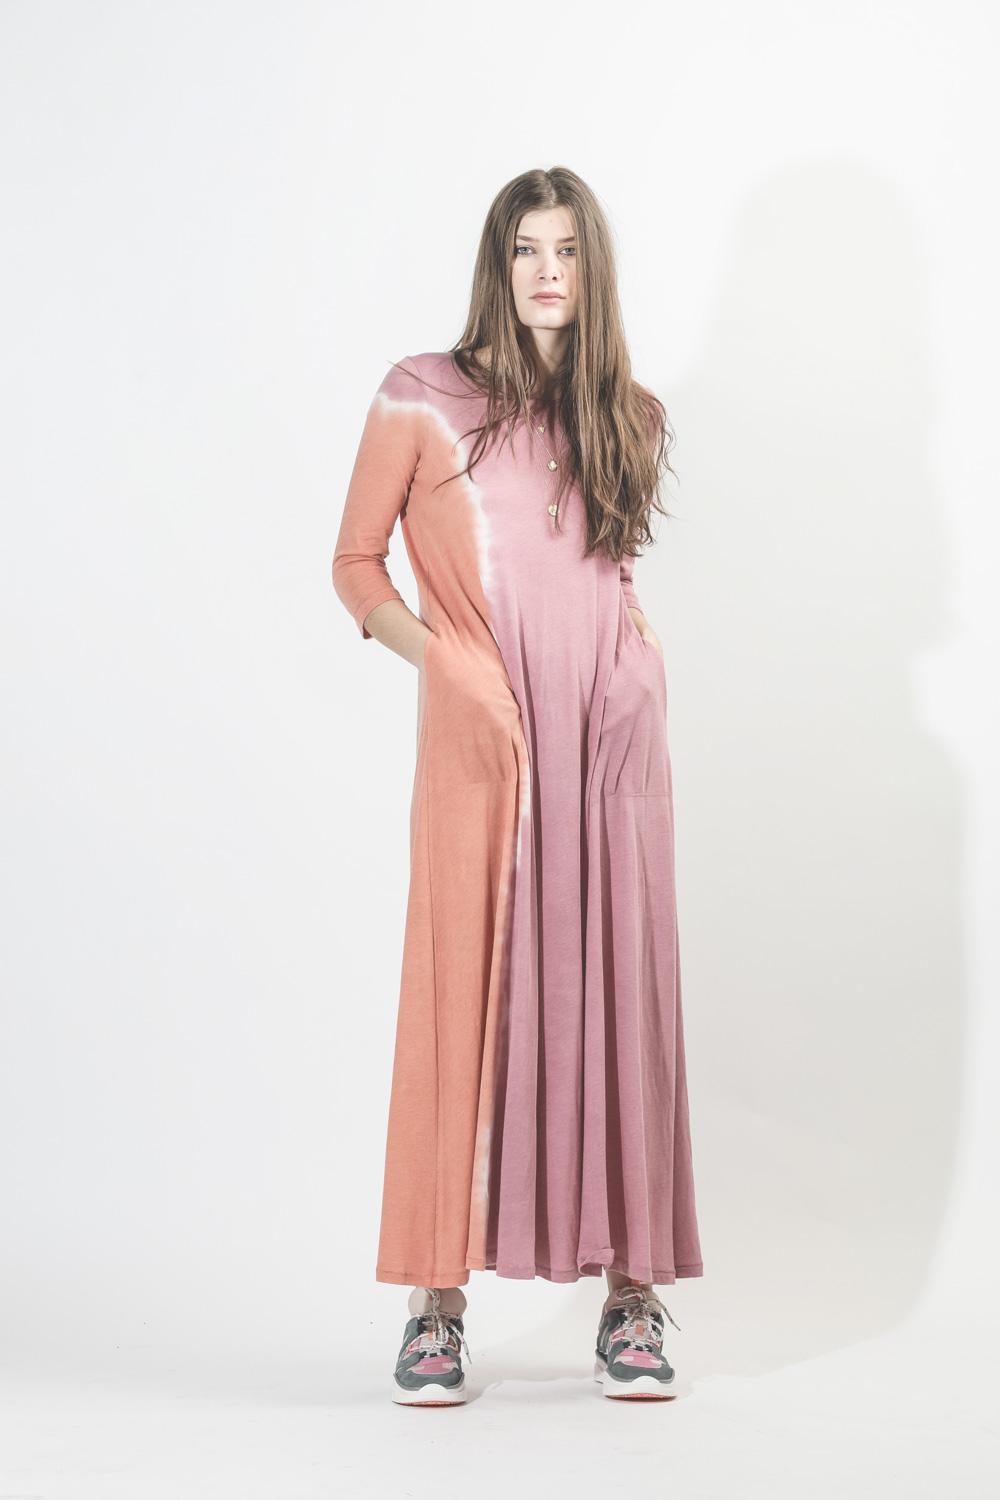 Raquel Allegra Pré-Collection 12 Sleeve Drama Maxi Dress - Pink Sunrise  